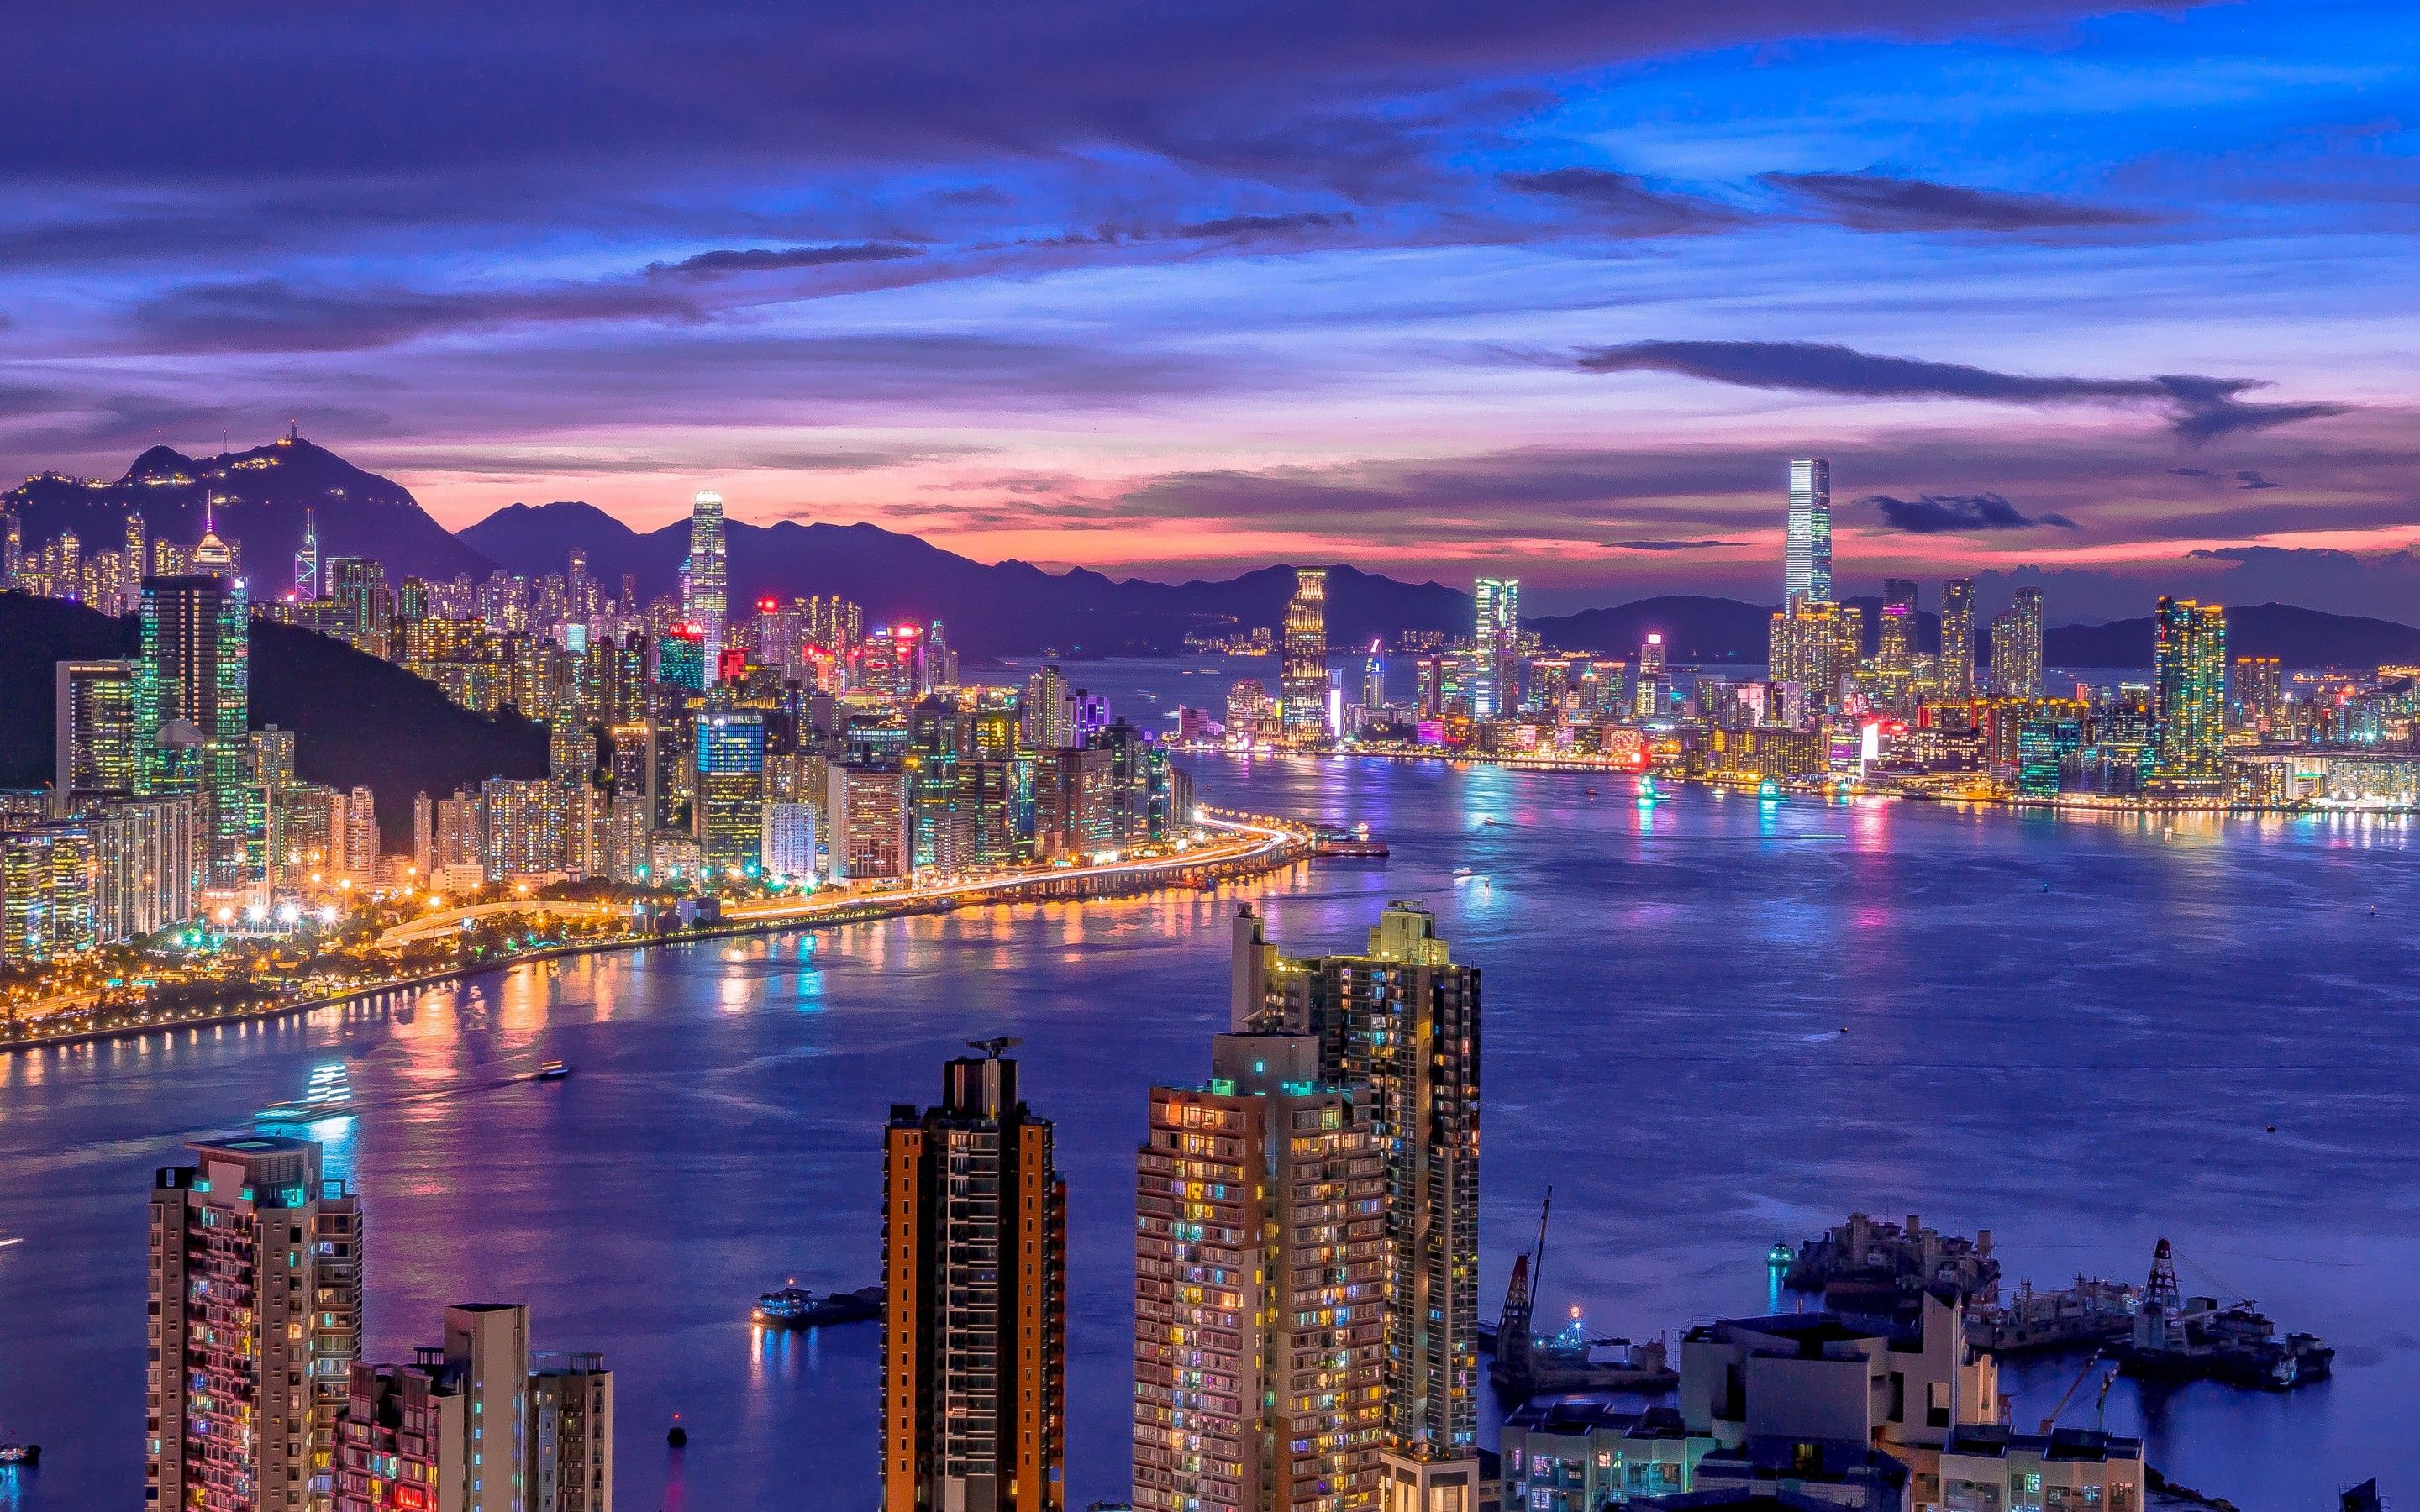 City Skyline 4K Wallpaper, Night life, Cityscape, Hong Kong, Skyscrapers, Purple sky, River, Sunset, World